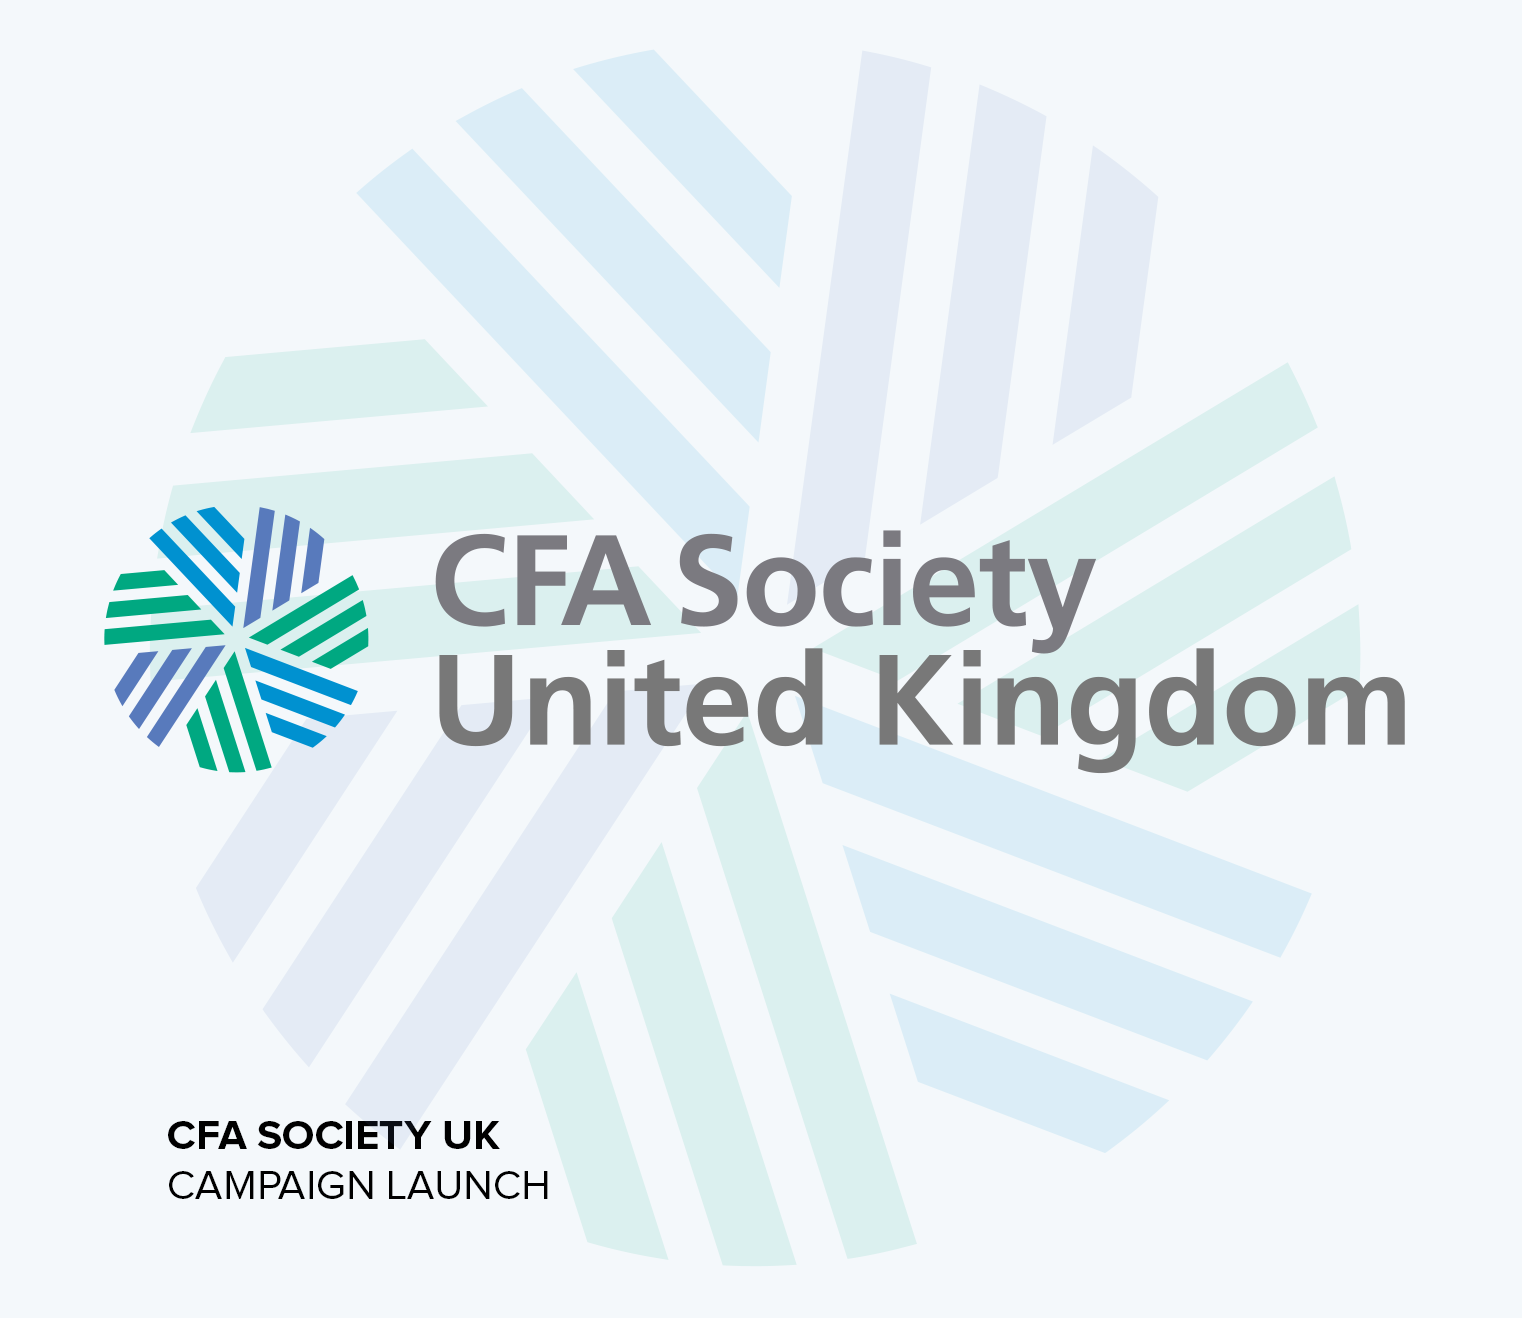 Case study cover page for CFA Society United Kingdom campaign launch.